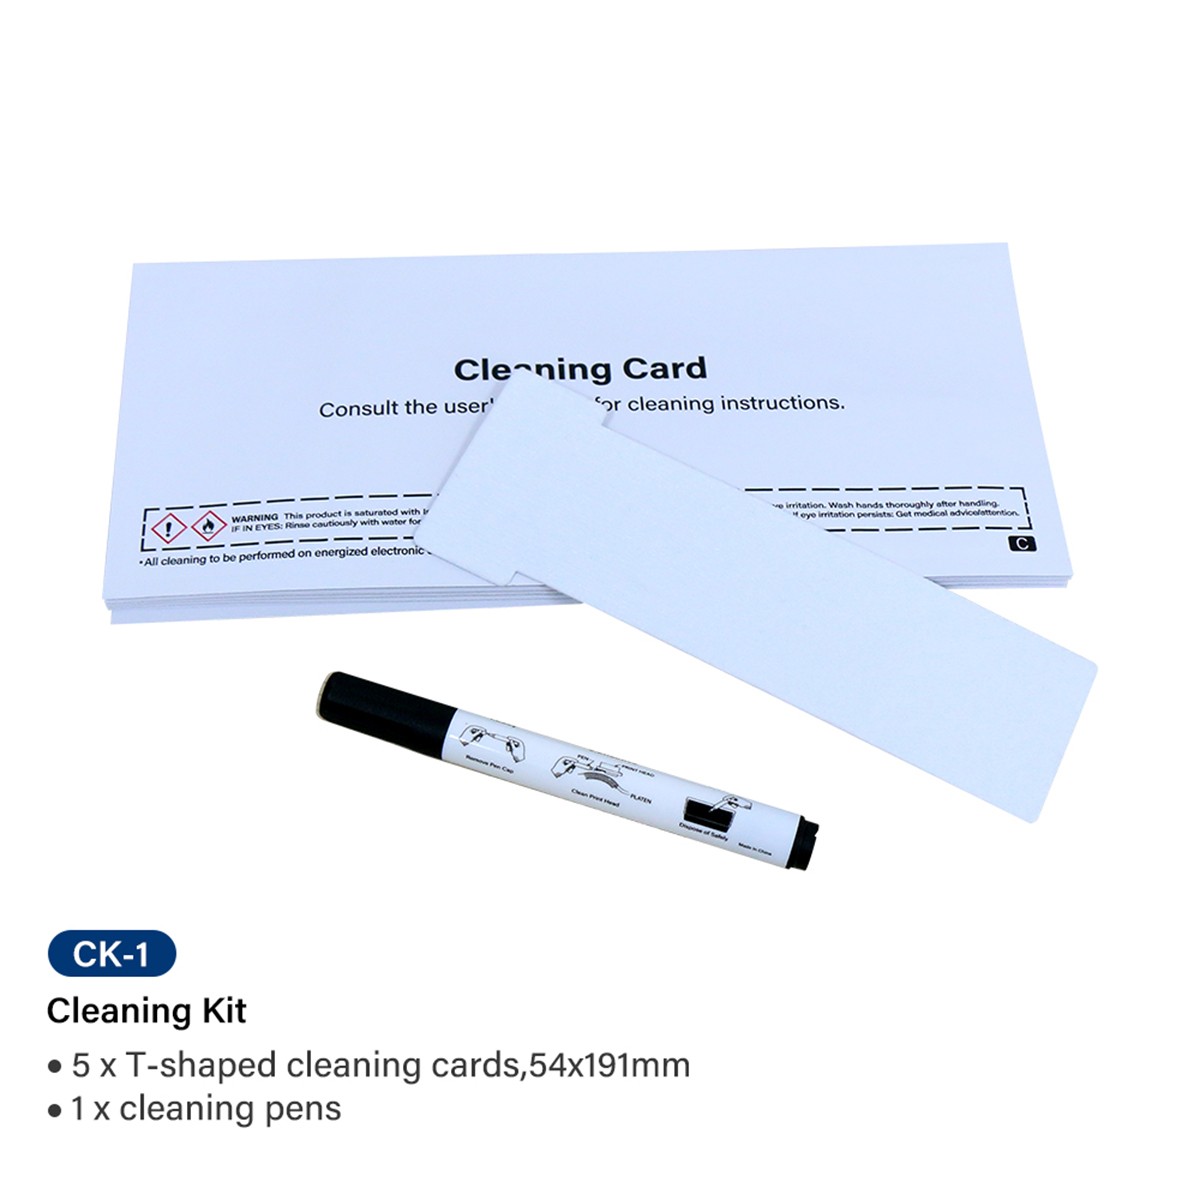 New Magicard CK-1 5 sheet Card printer clean 54x191mm 1clean pen - Click Image to Close